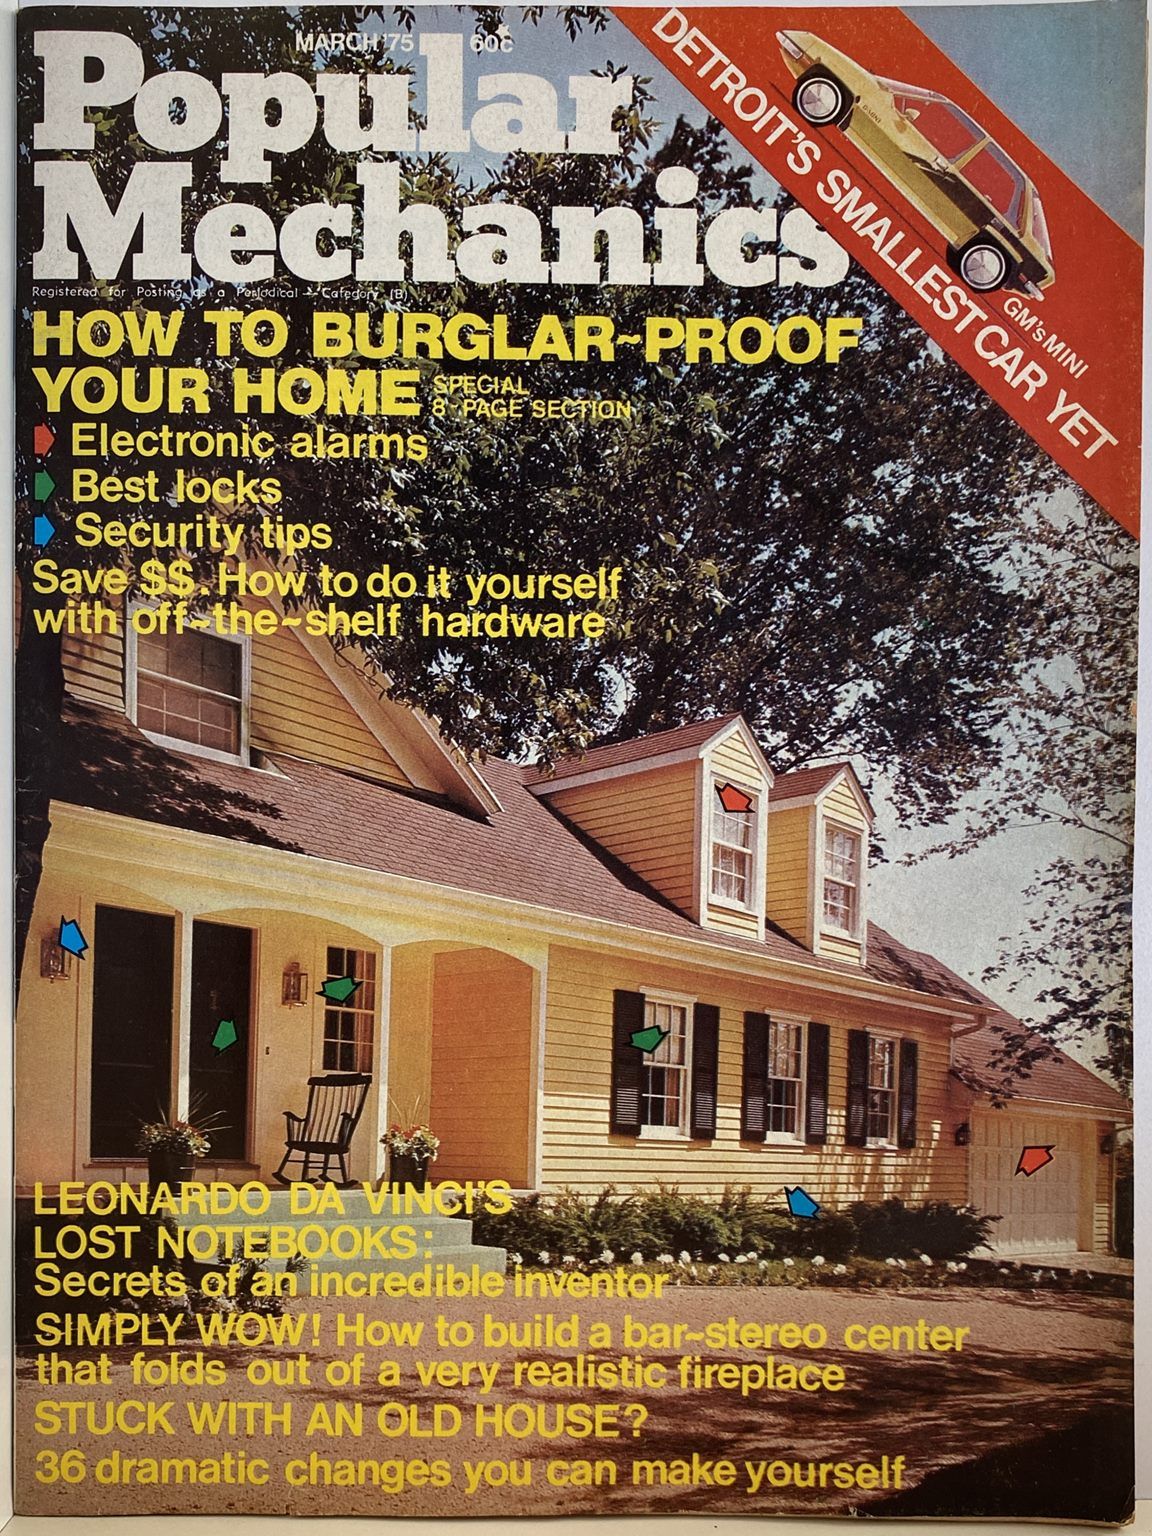 VINTAGE MAGAZINE: Popular Mechanics - Vol. 143, No. 1 - March 1975